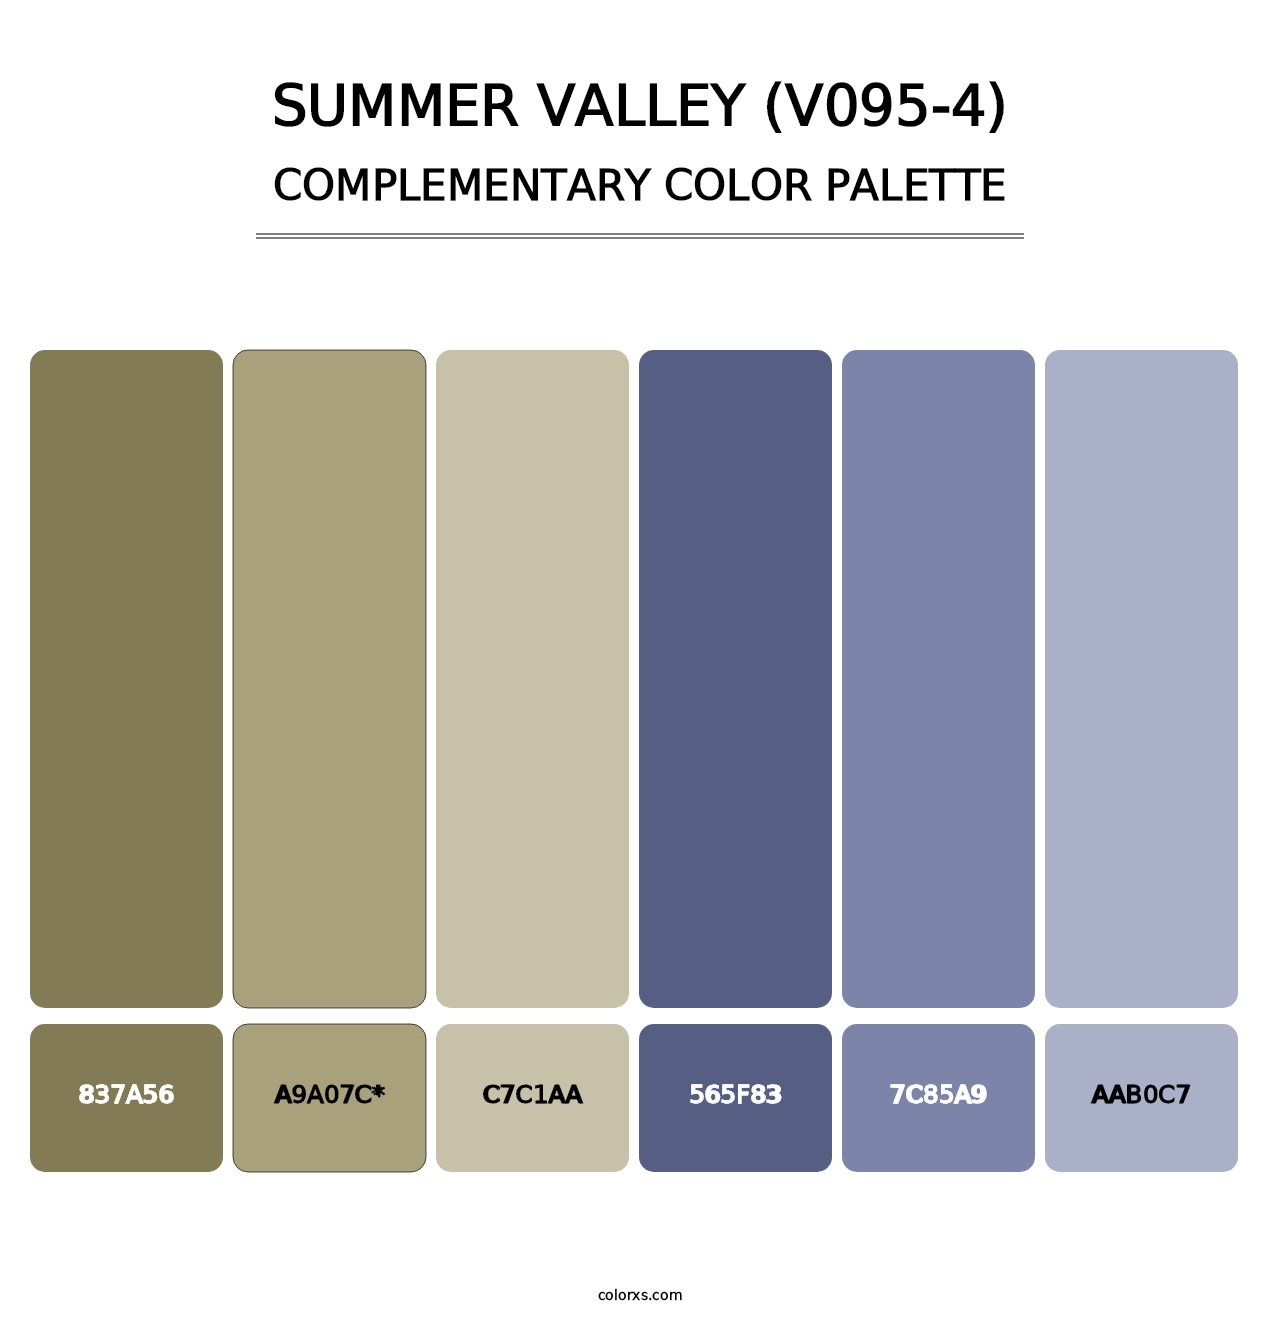 Summer Valley (V095-4) - Complementary Color Palette